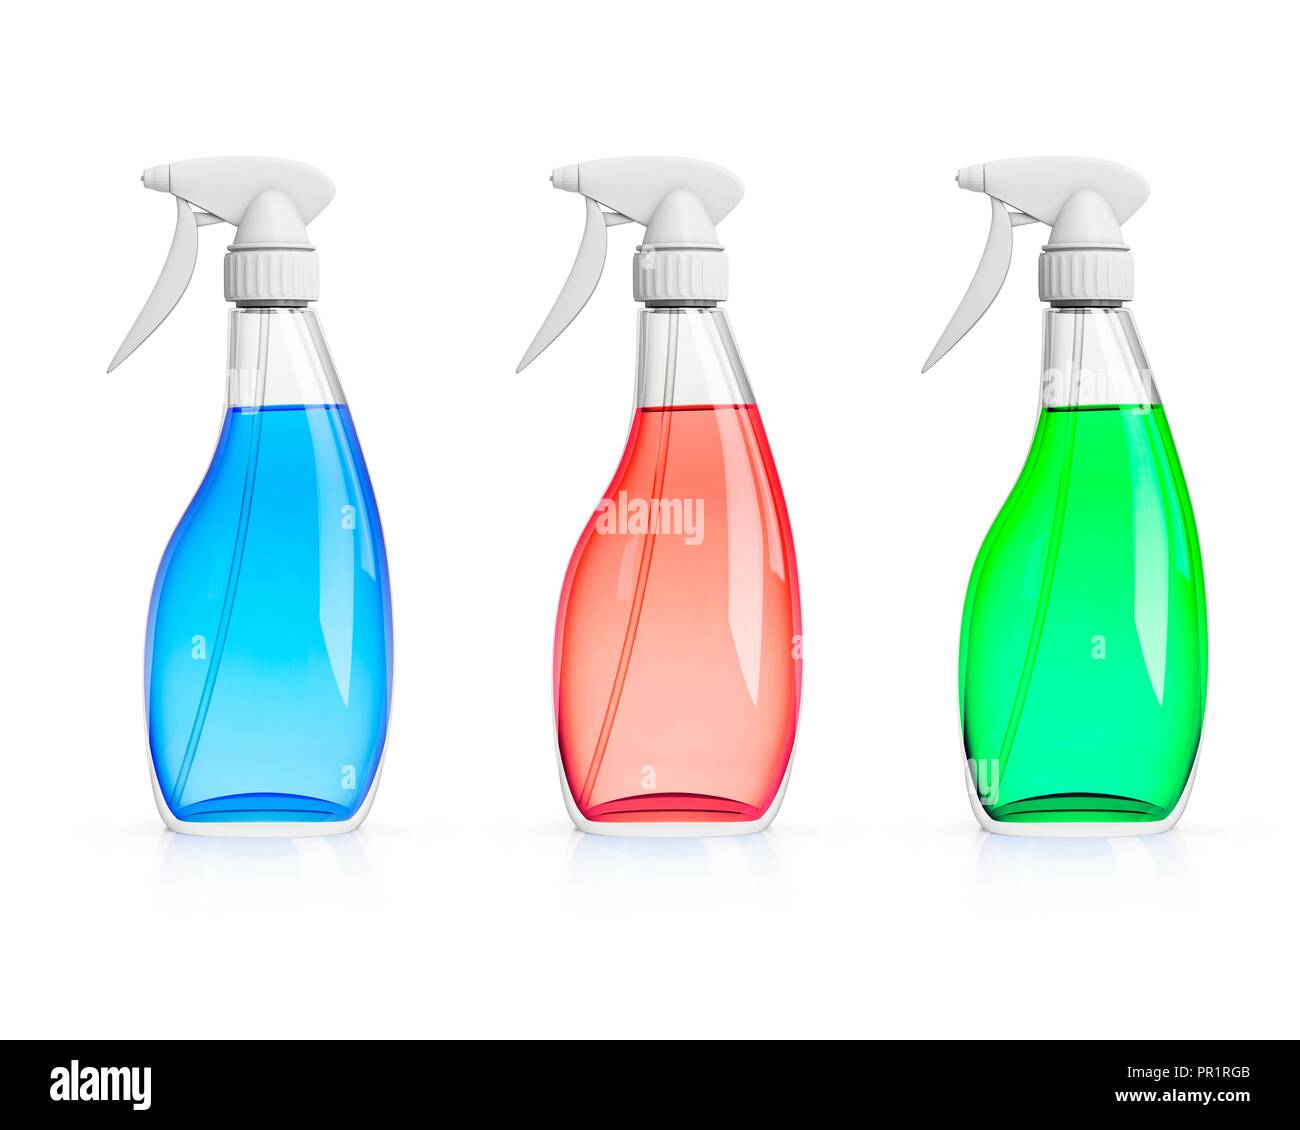 Spray bottles, illustration. Stock Photo